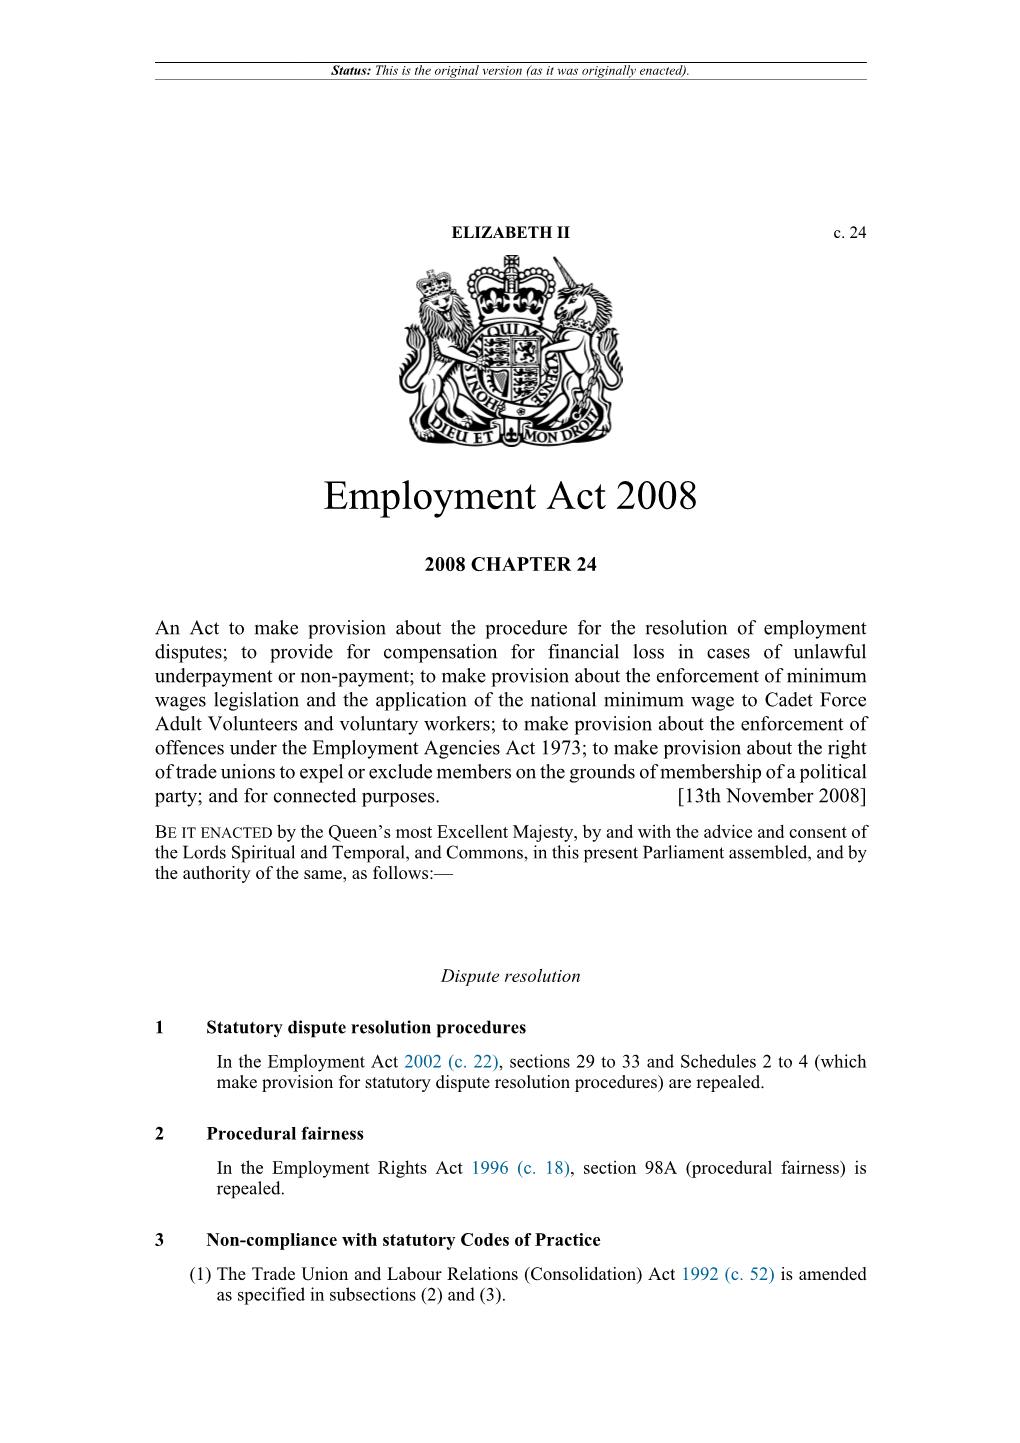 Employment Act 2008